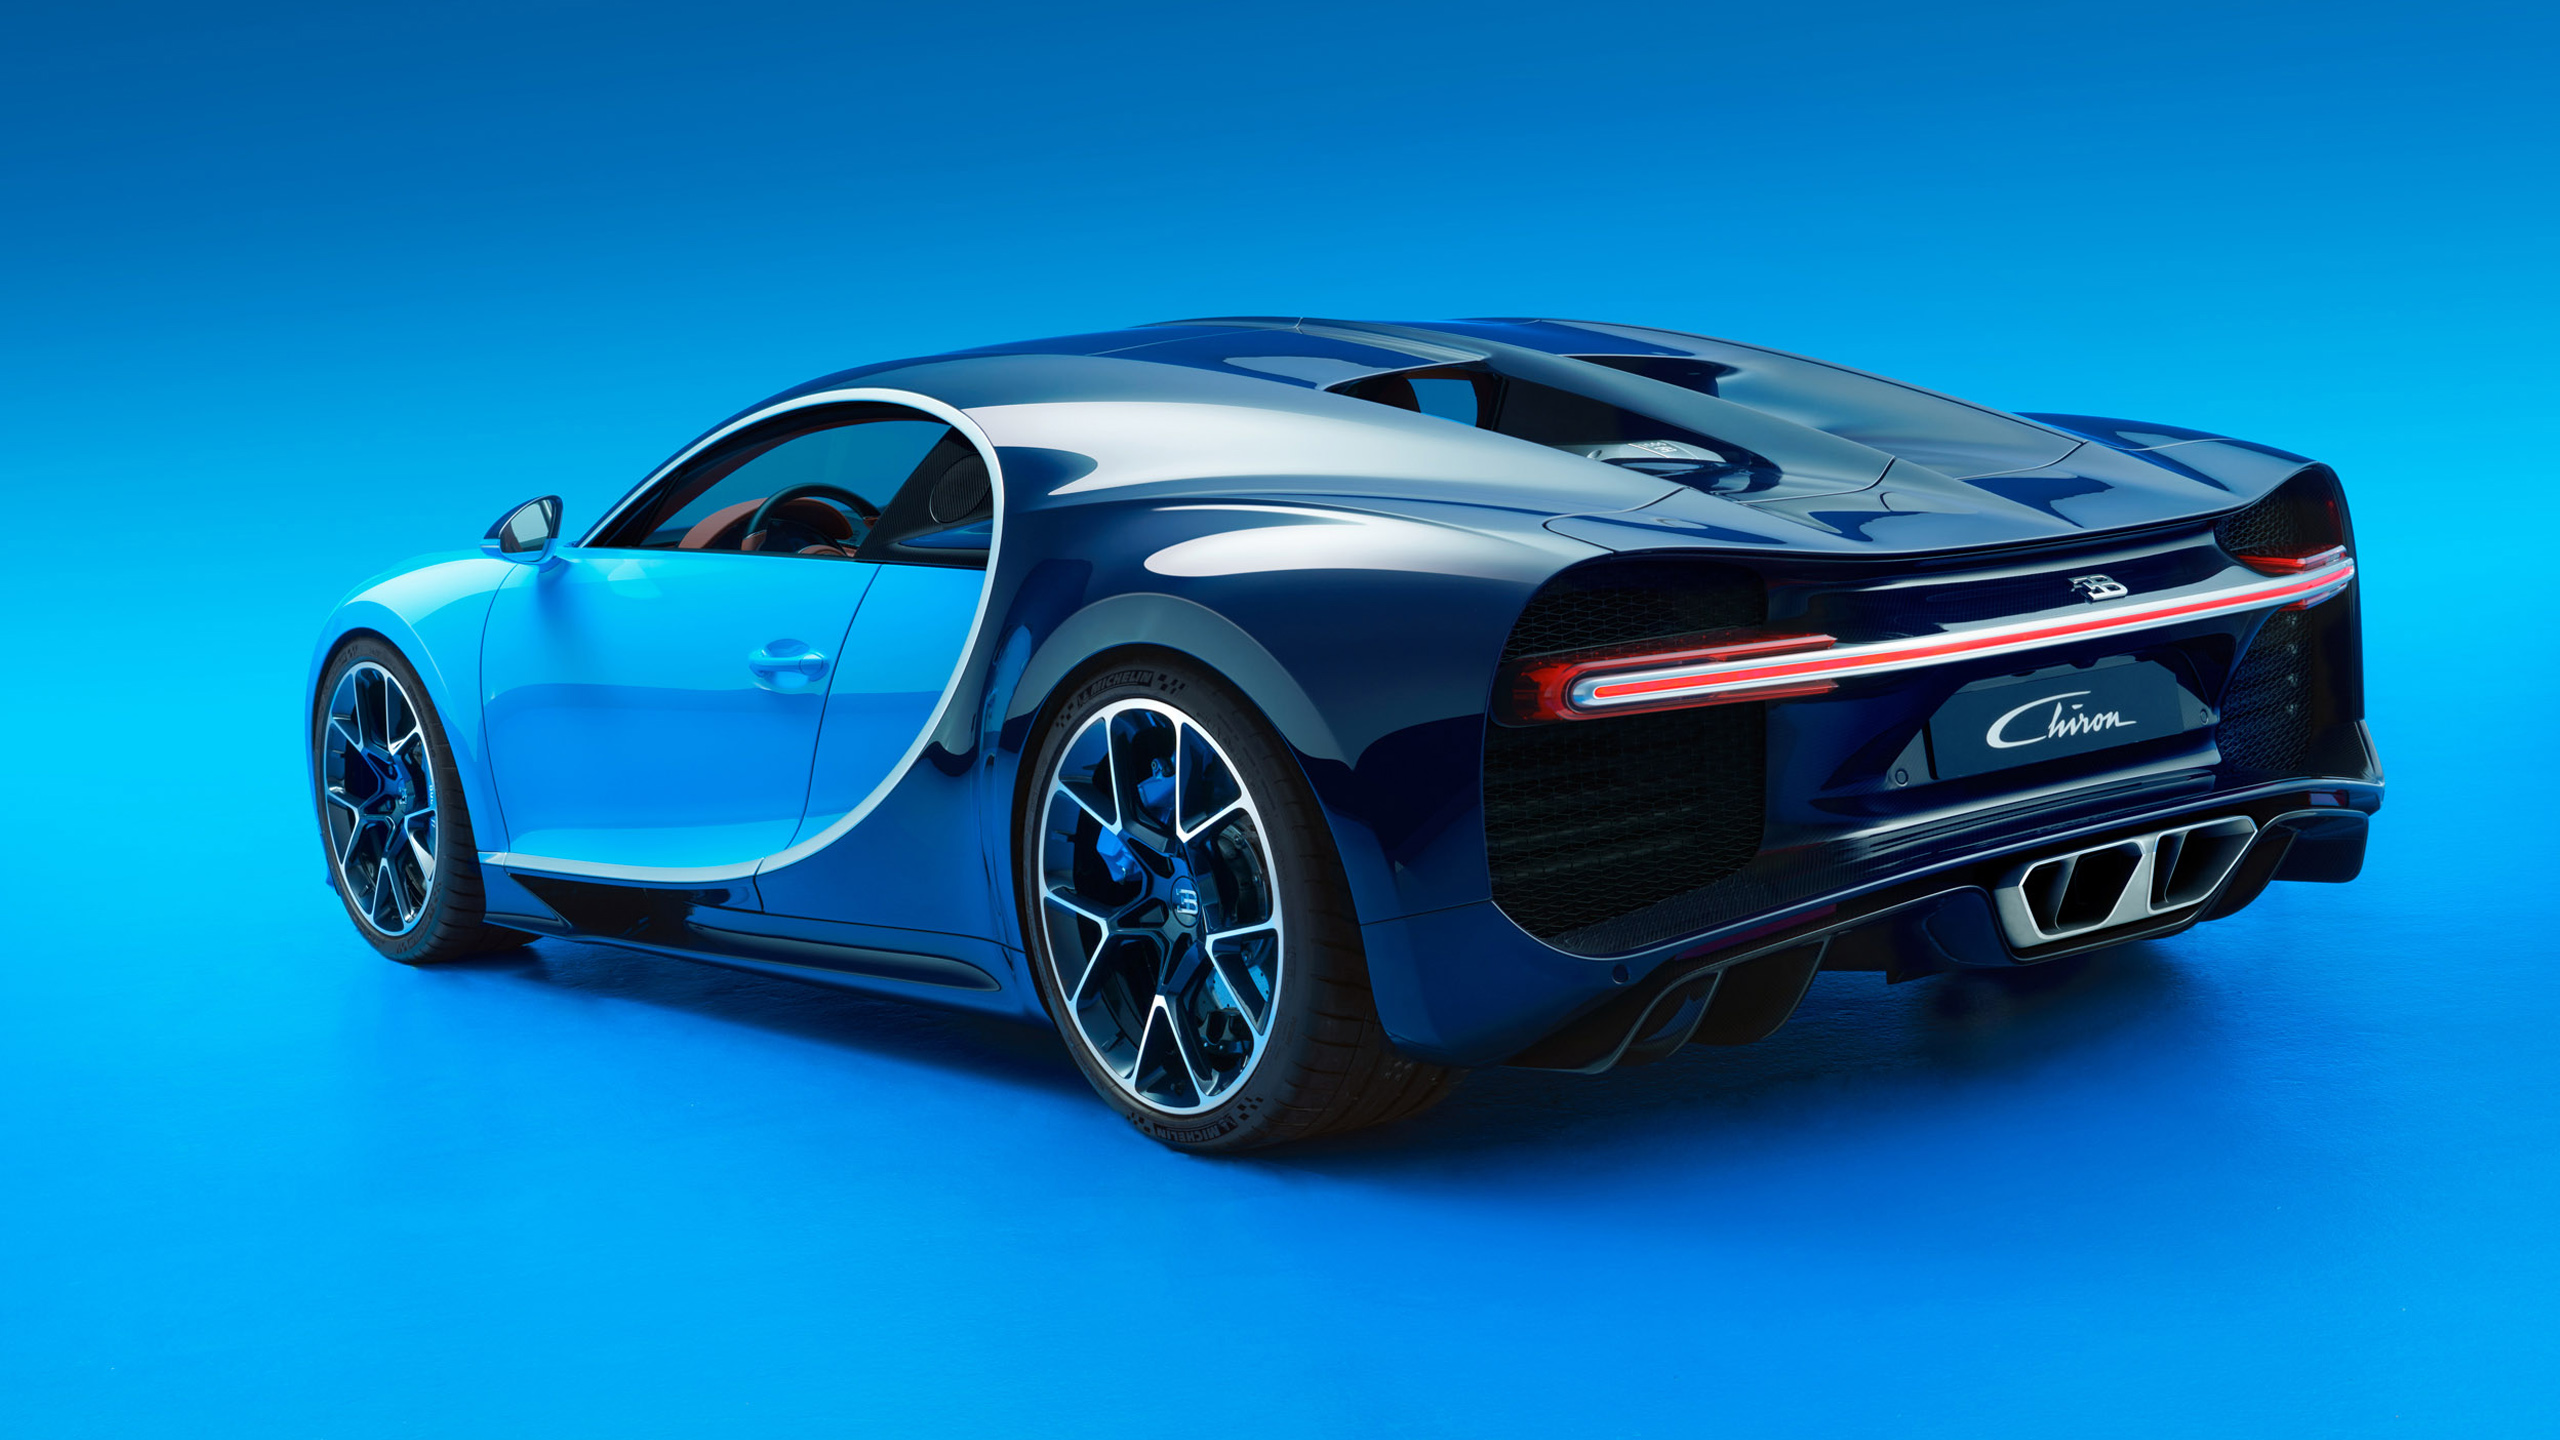 Wallpaper Mobil Bugatti